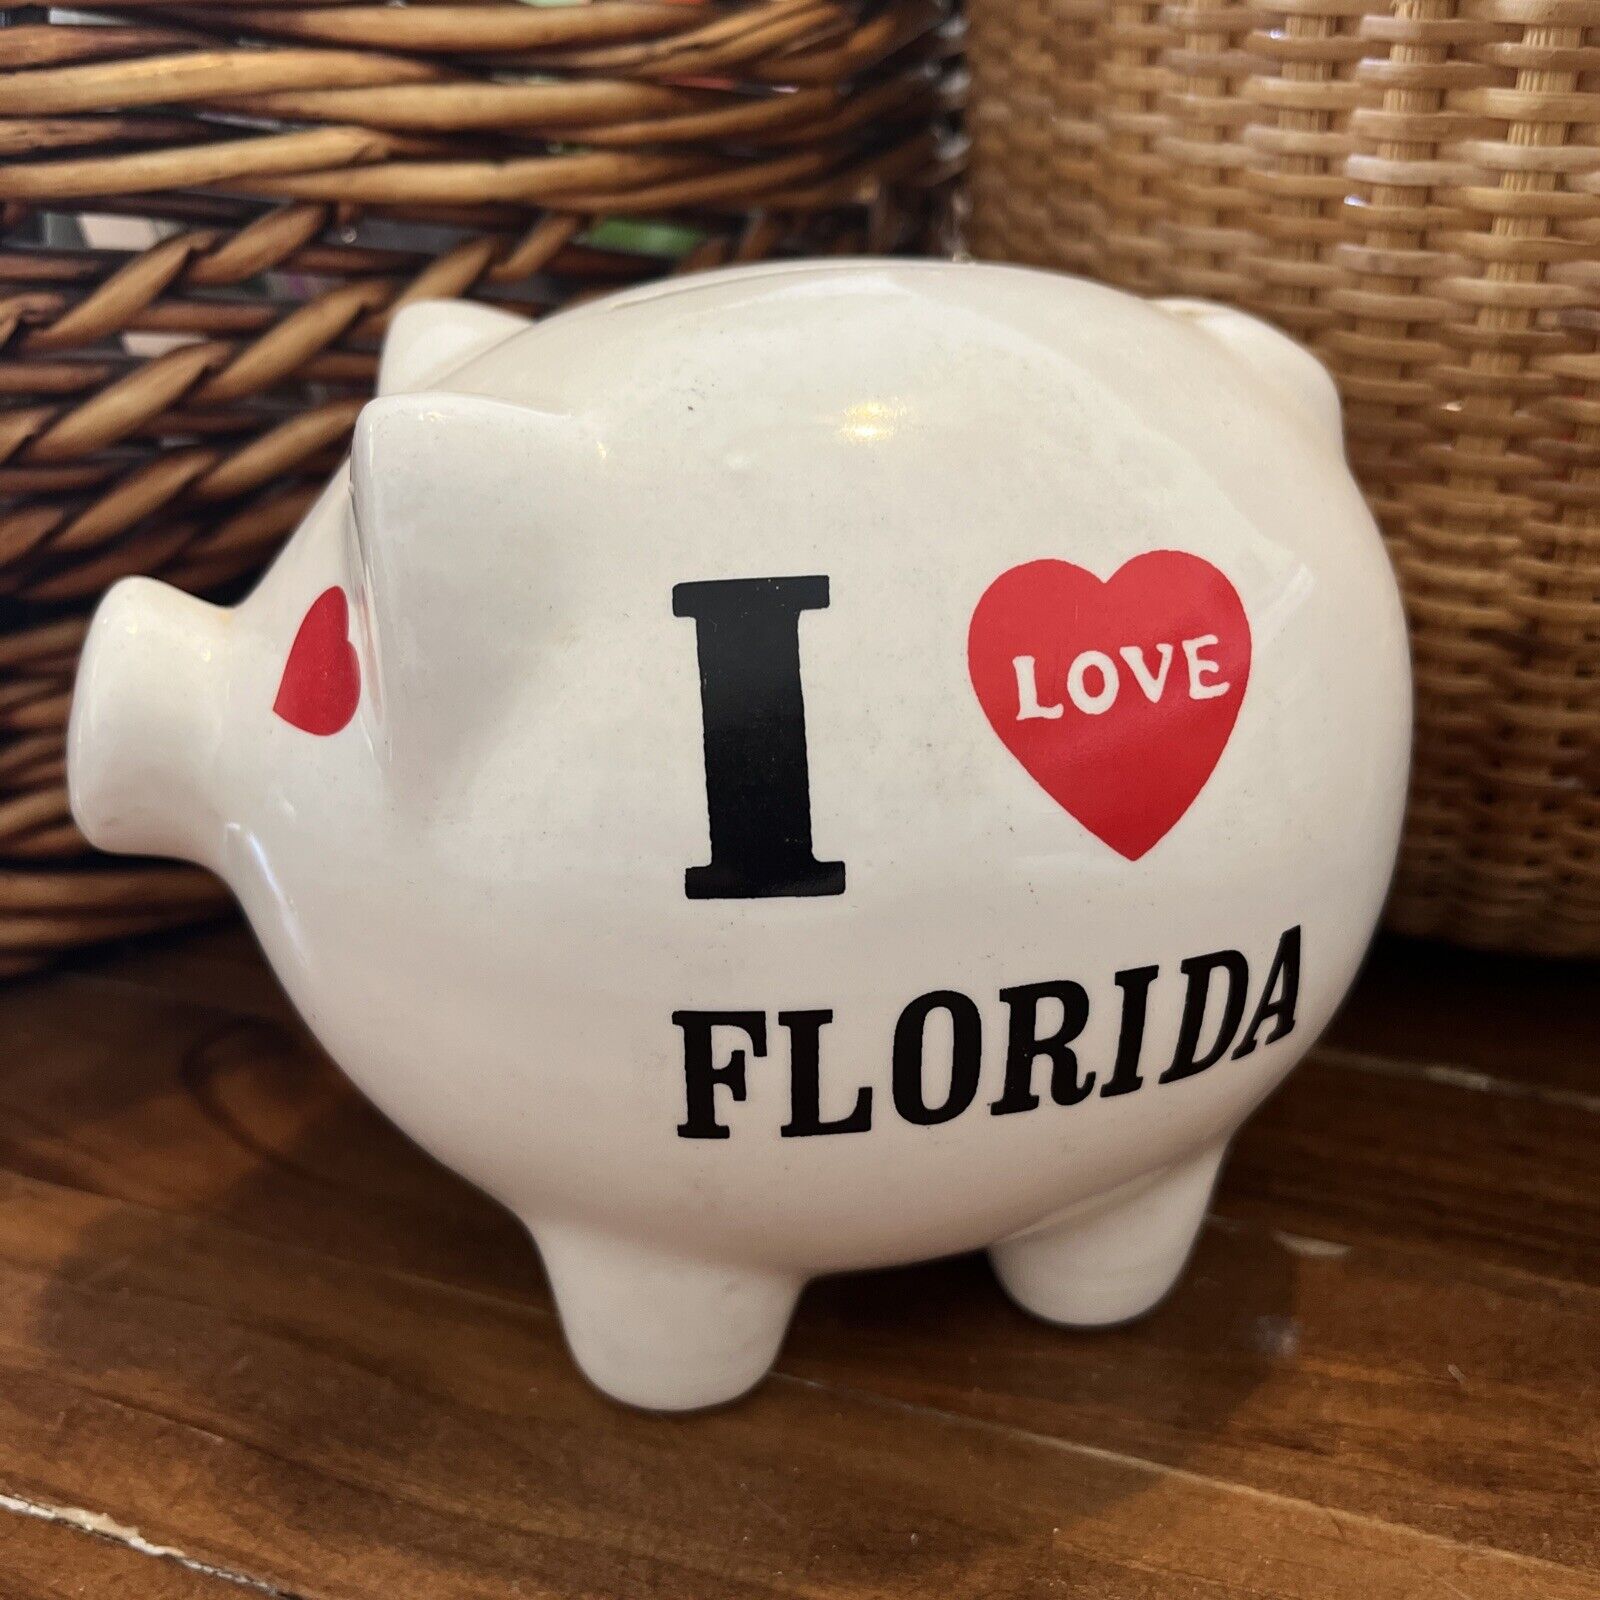 VTG Florida Souvenir Piggy Bank I LOVE FLORIDA White Red Hearts Ceramic Travel 